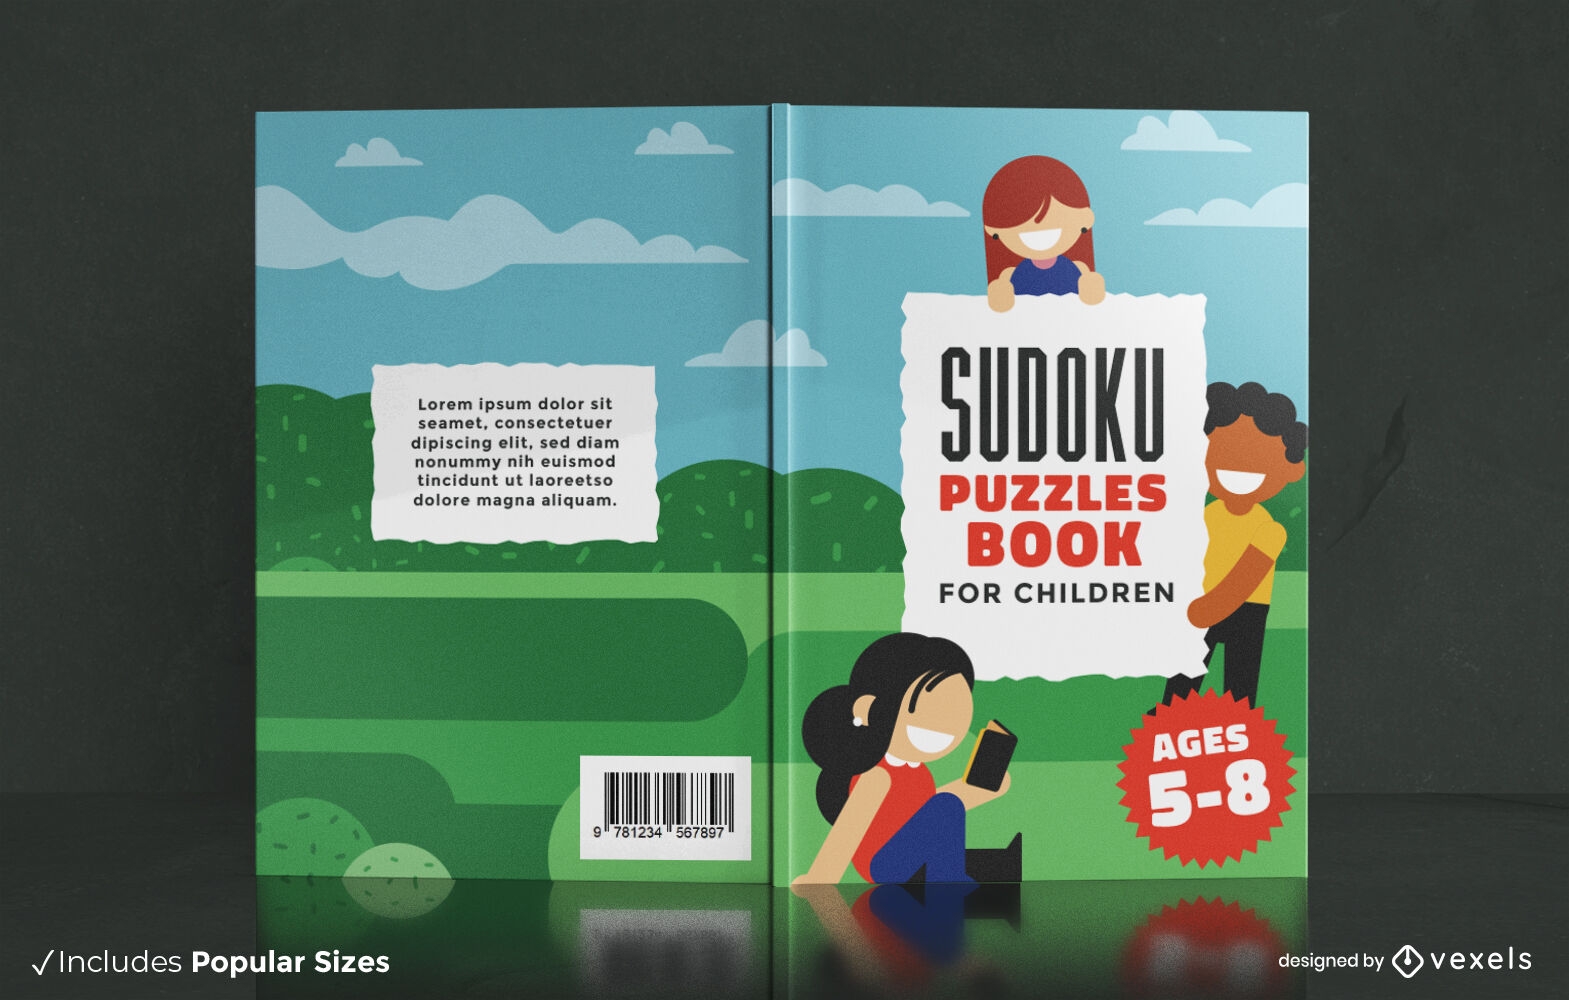 Sudoku Puzzles for Kids Book cover design